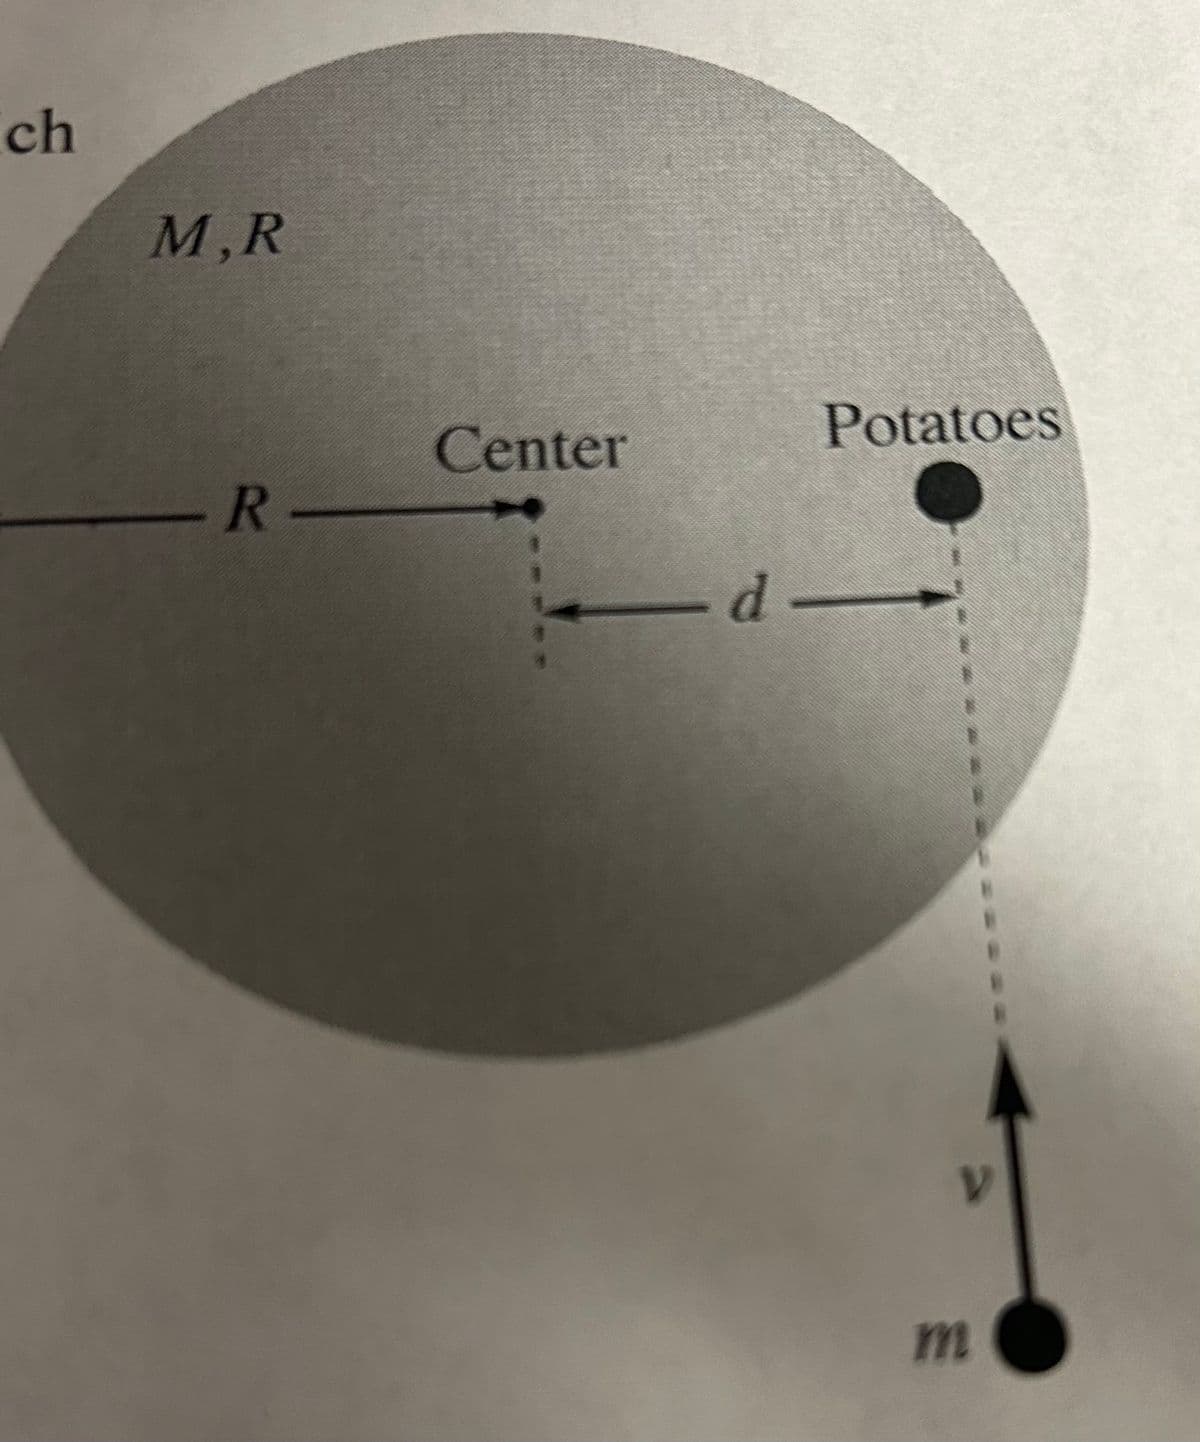 ch
M, R
- R-
Center
Potatoes
d—
V
m